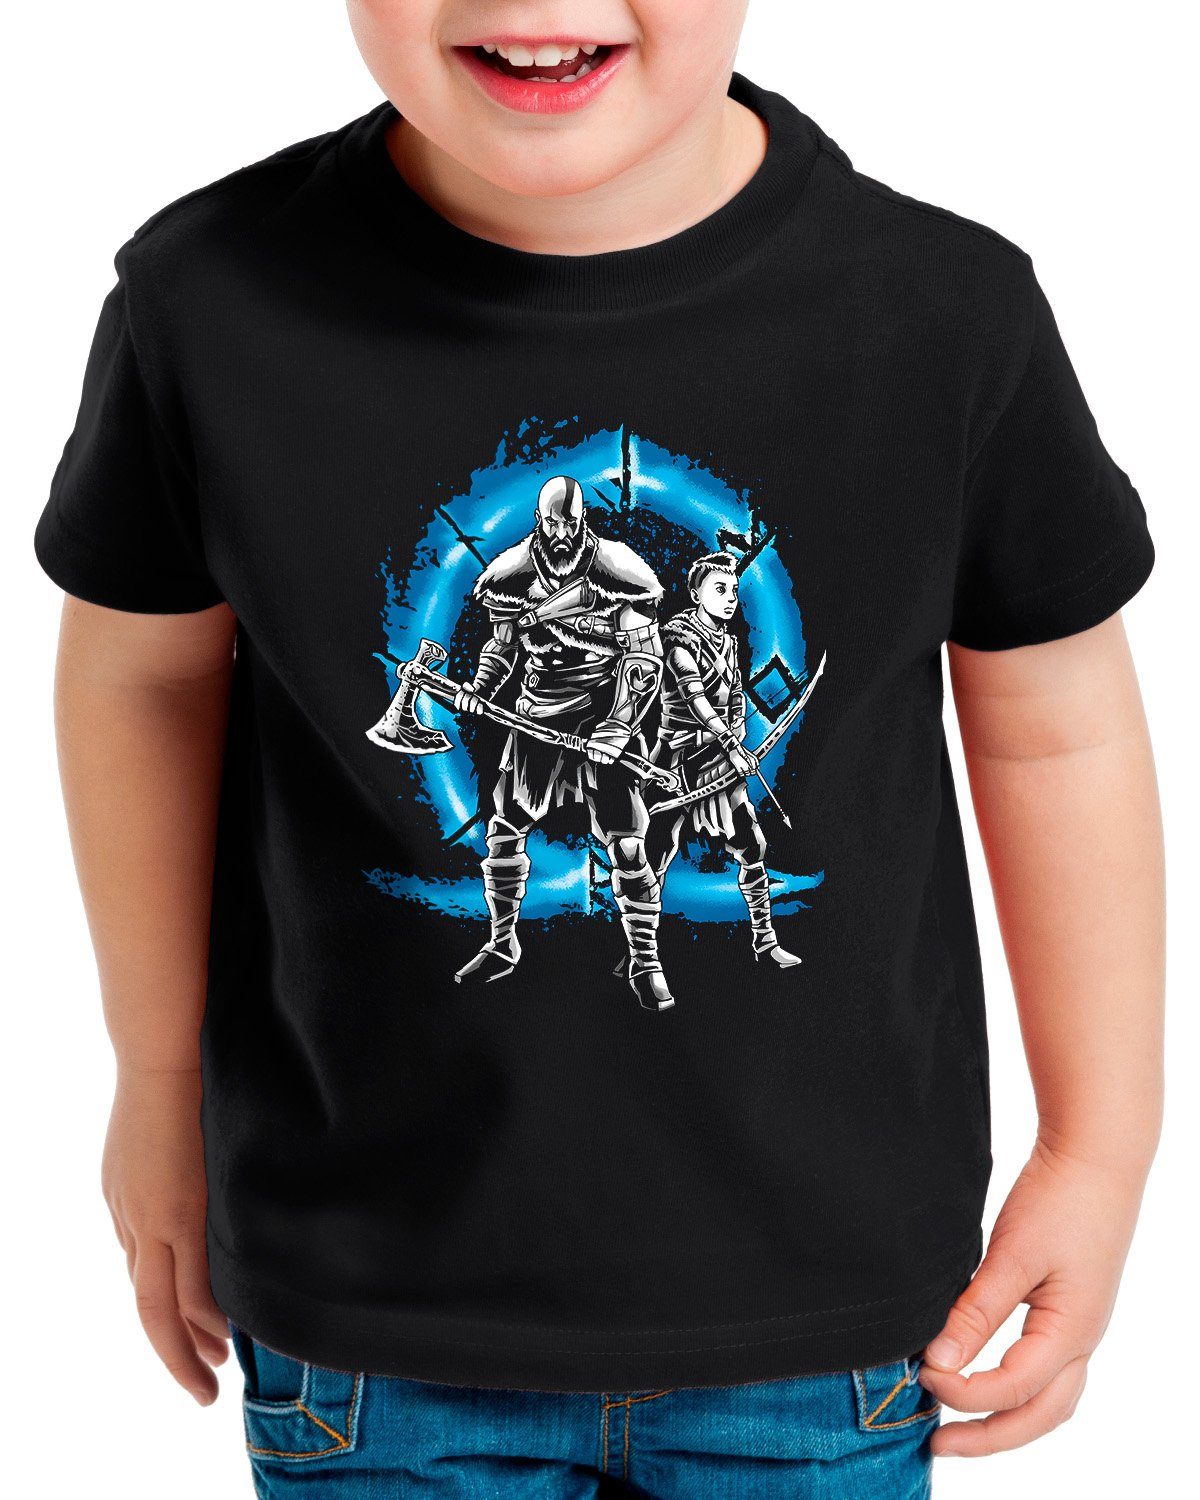 Print-Shirt Kinder war style3 kratos of adventure Family god action T-Shirt War